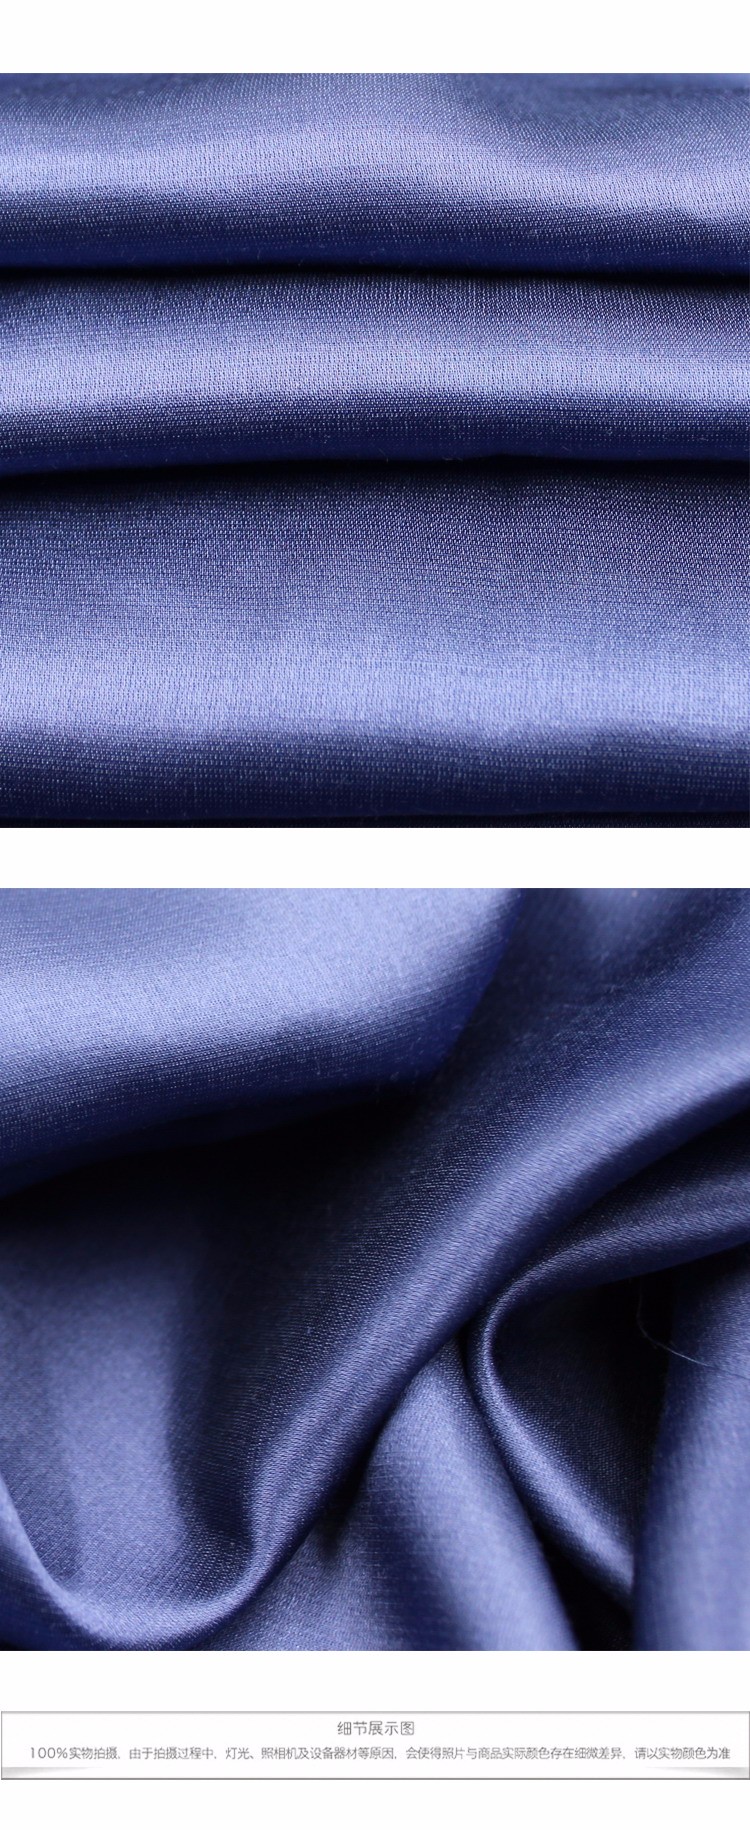 Y28 Silk Satin 50% Mulberry silk 50% cotton fabric for t sleepwear